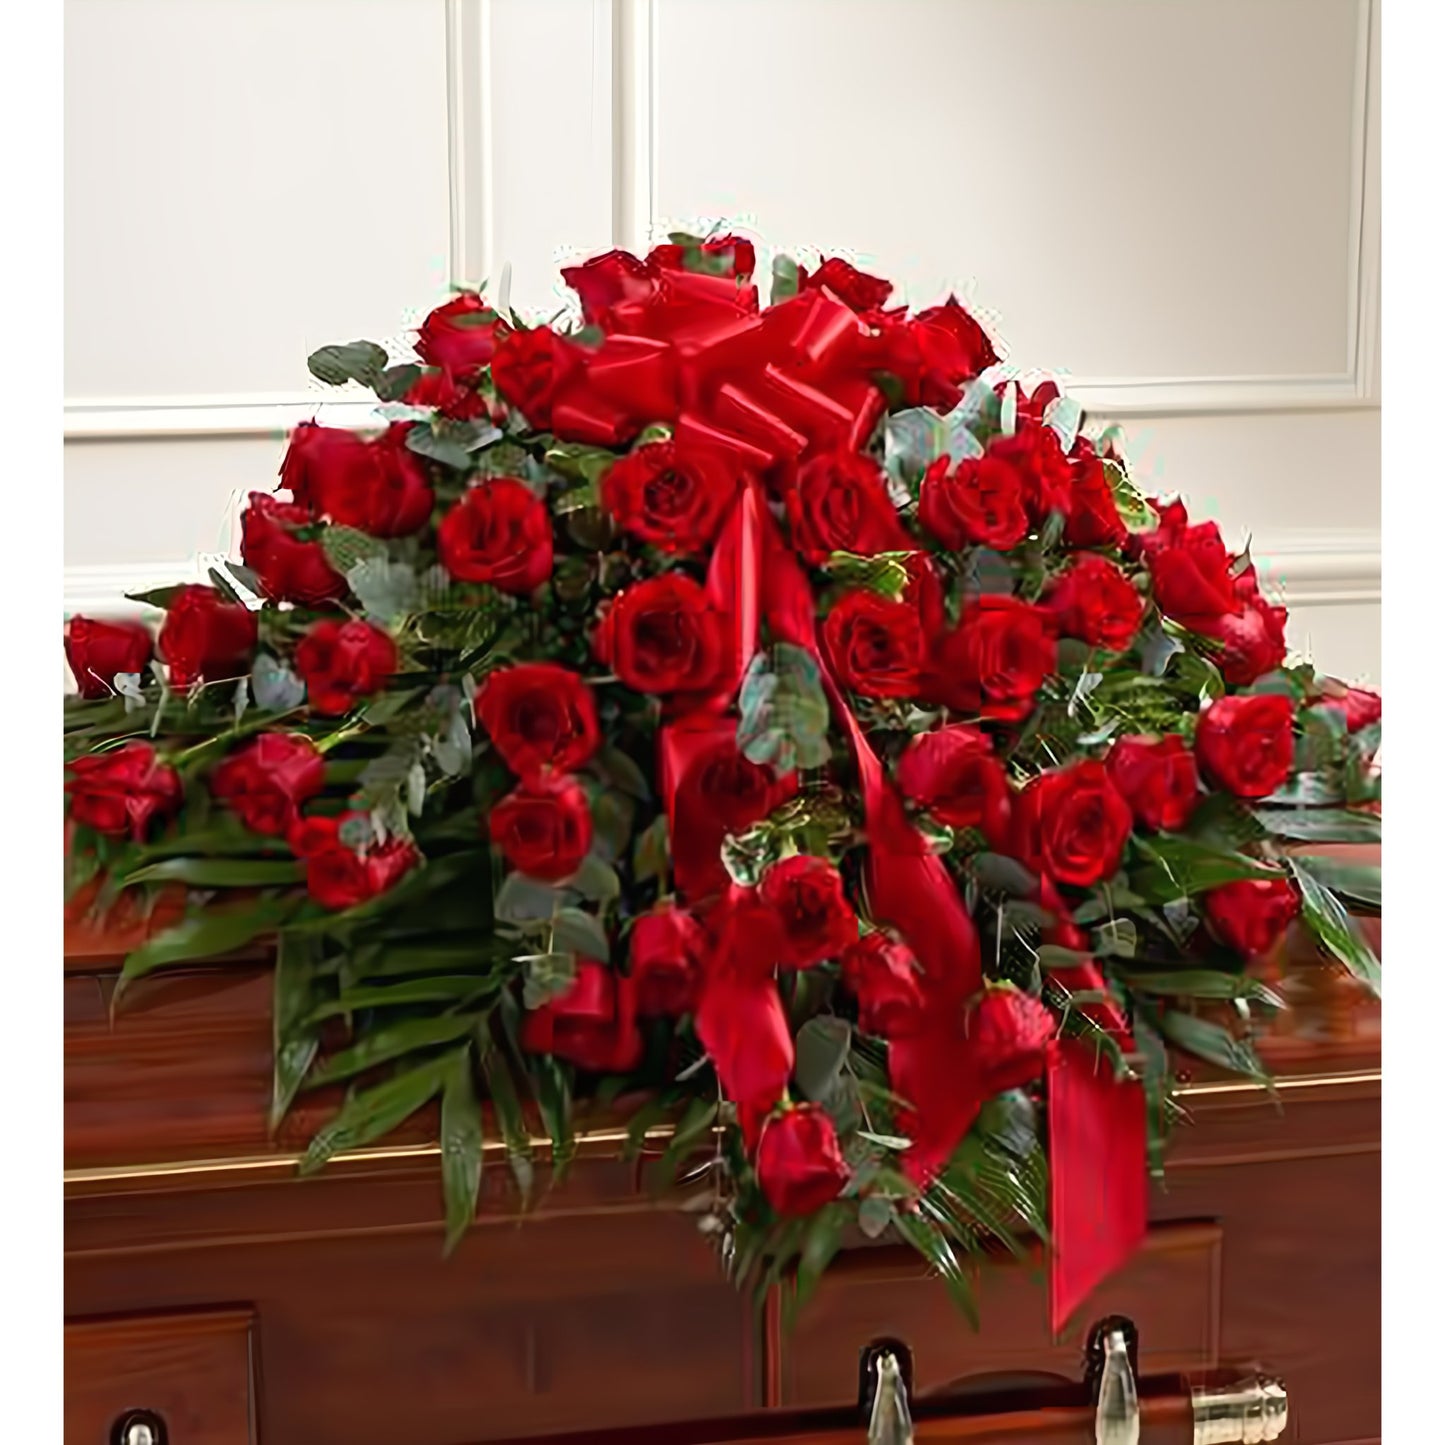 Cherished Memories Red Rose Half Casket Cover - Floral_Arrangement - Flower Delivery NYC